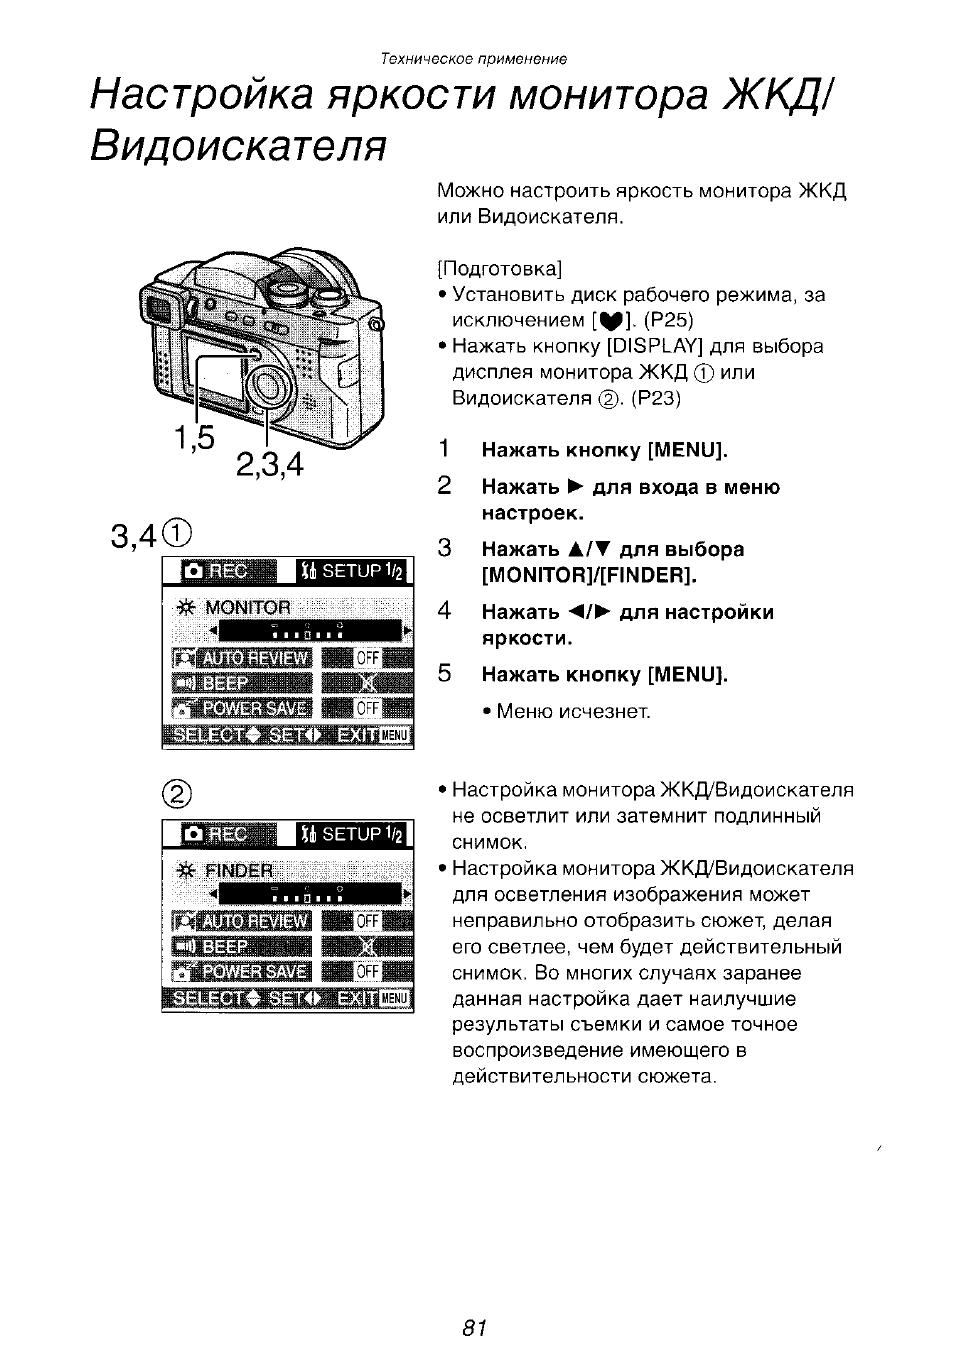 Настройка яркости монитора жкд/ видоискателя, 3,4© а | Инструкция по эксплуатации Panasonic DMC-FZ2EN | Страница 81 / 154